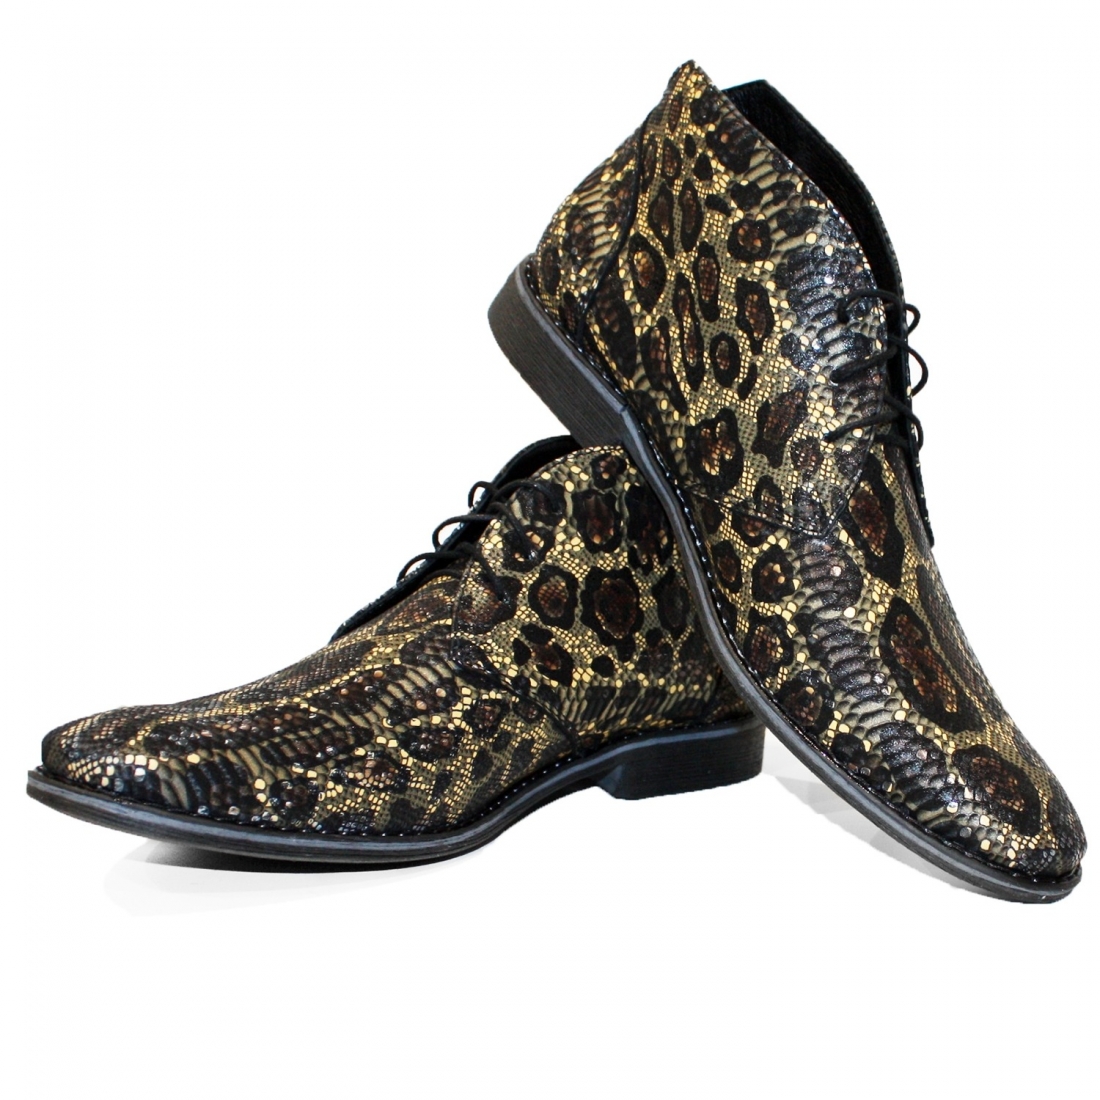 Modello Tarroka - Desert Boots - Handmade Colorful Italian Leather Shoes